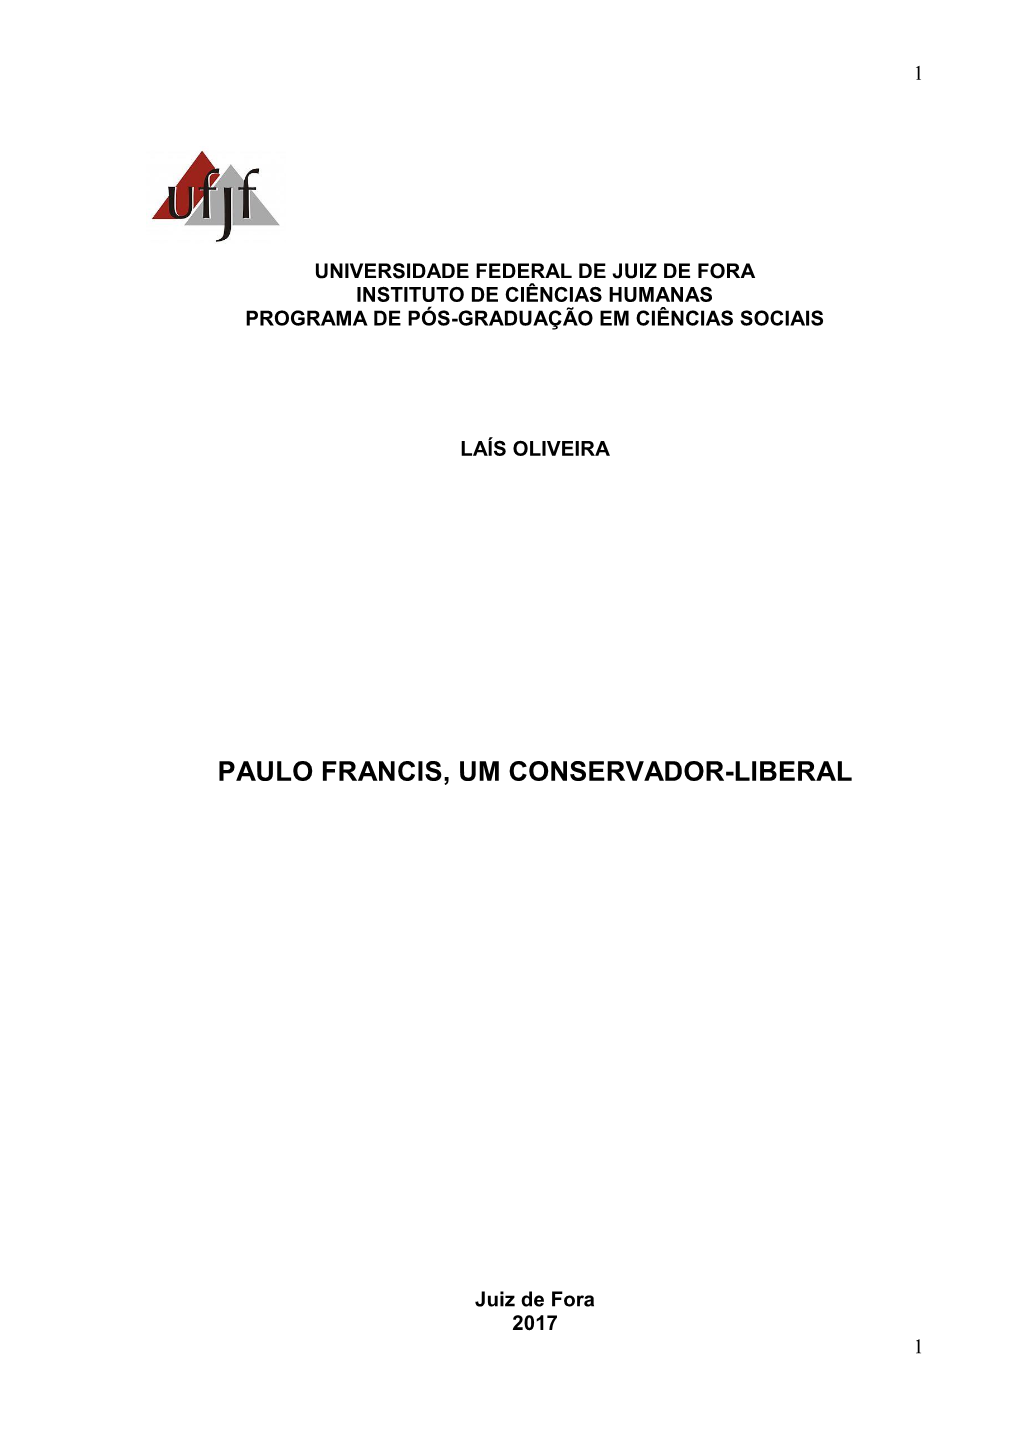 Paulo Francis, Um Conservador-Liberal